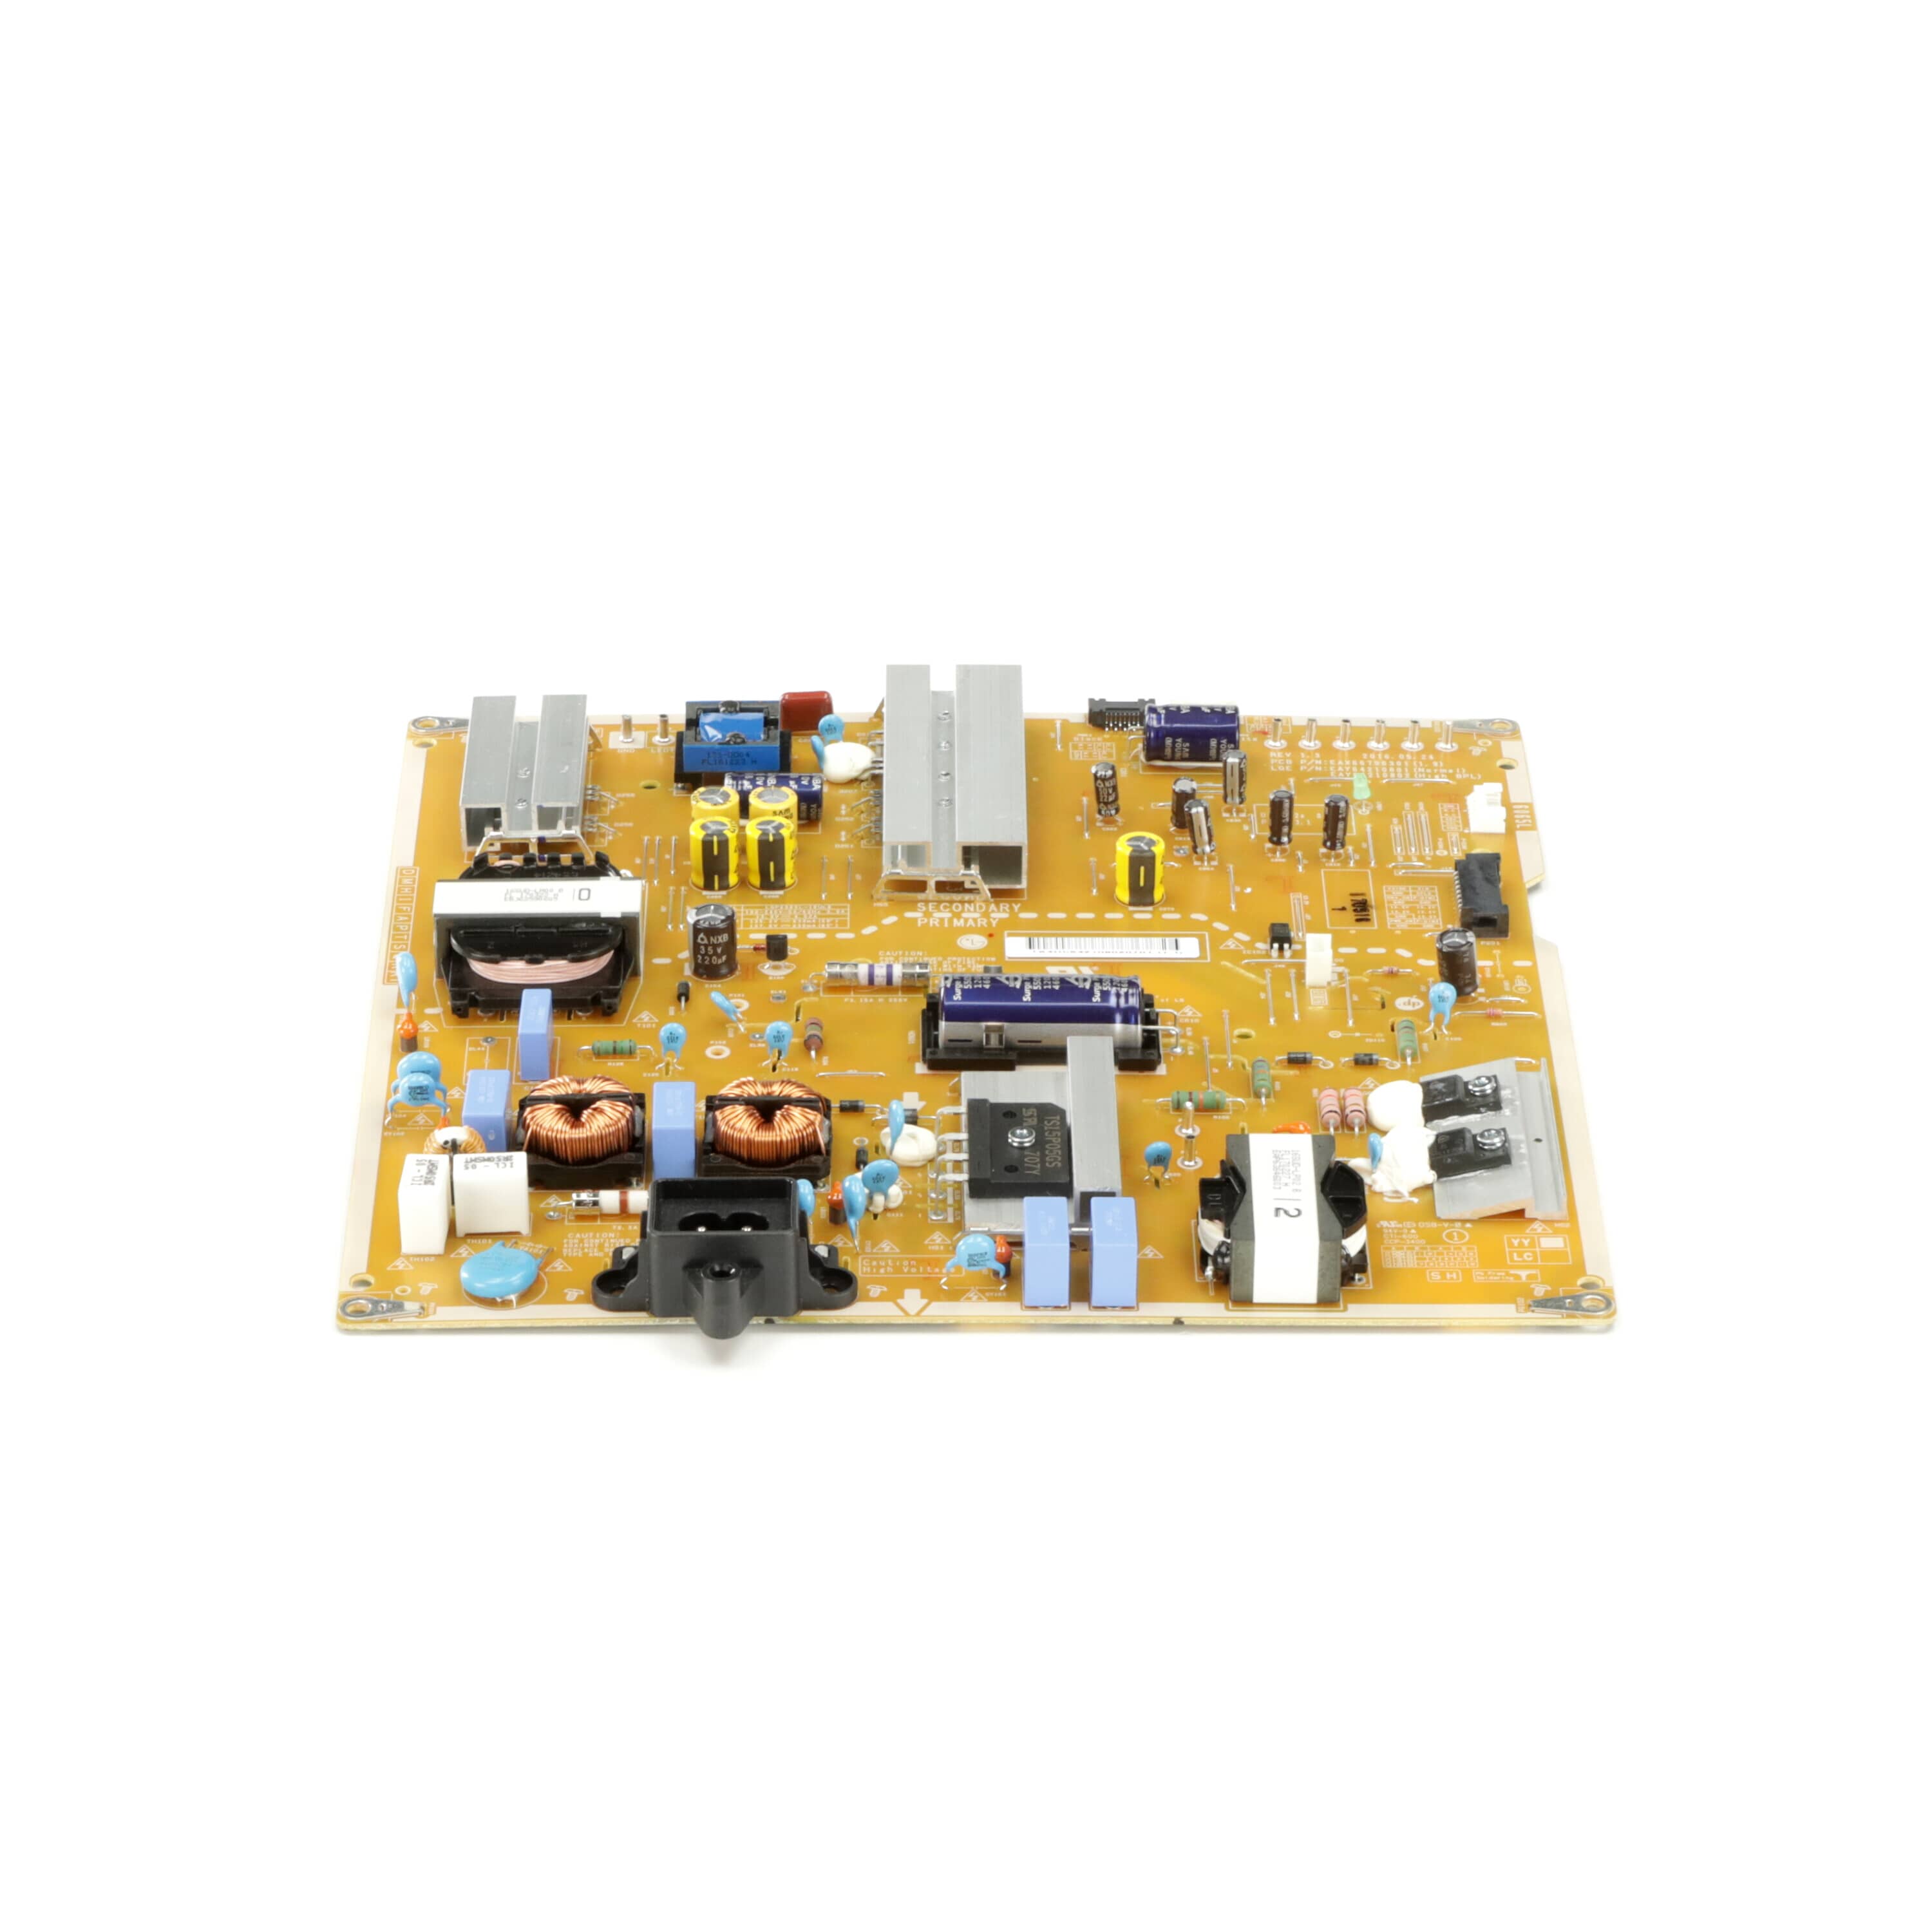 LG EAY64210802 Power Supply Board Assembly